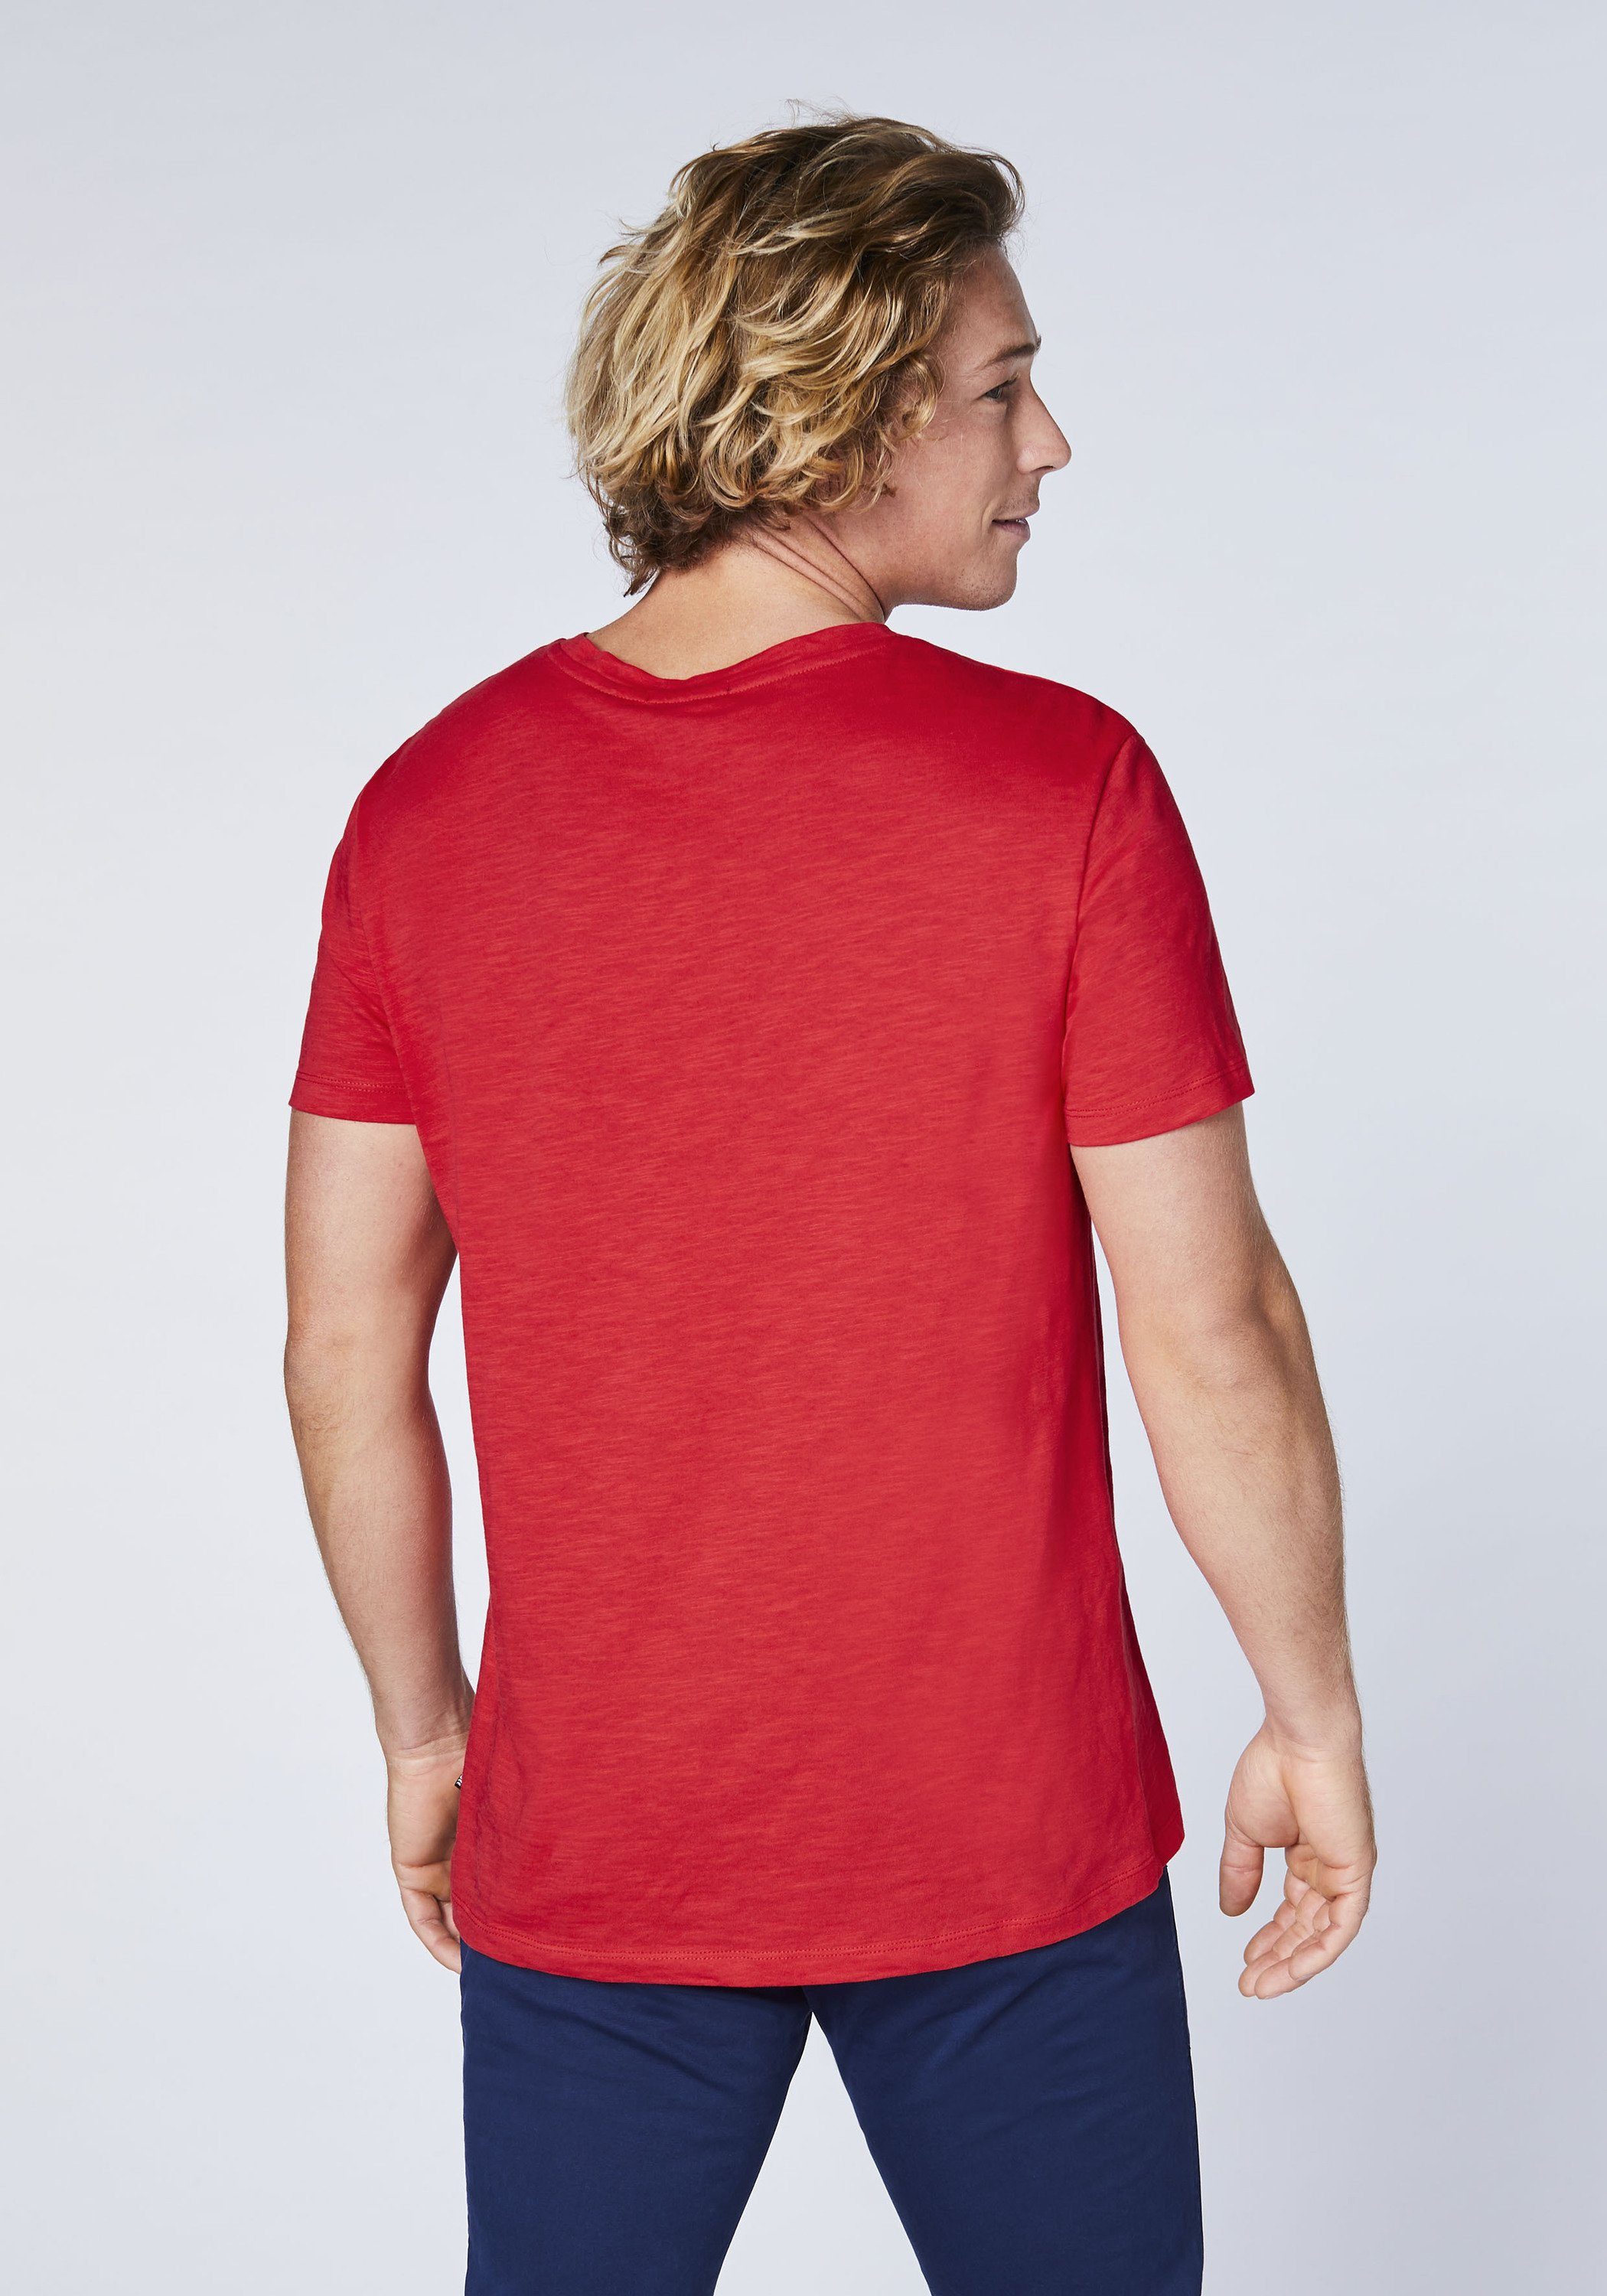 1 Print-Shirt Label-Symbol T-Shirt Chiemsee gedrucktem mit Lollipop